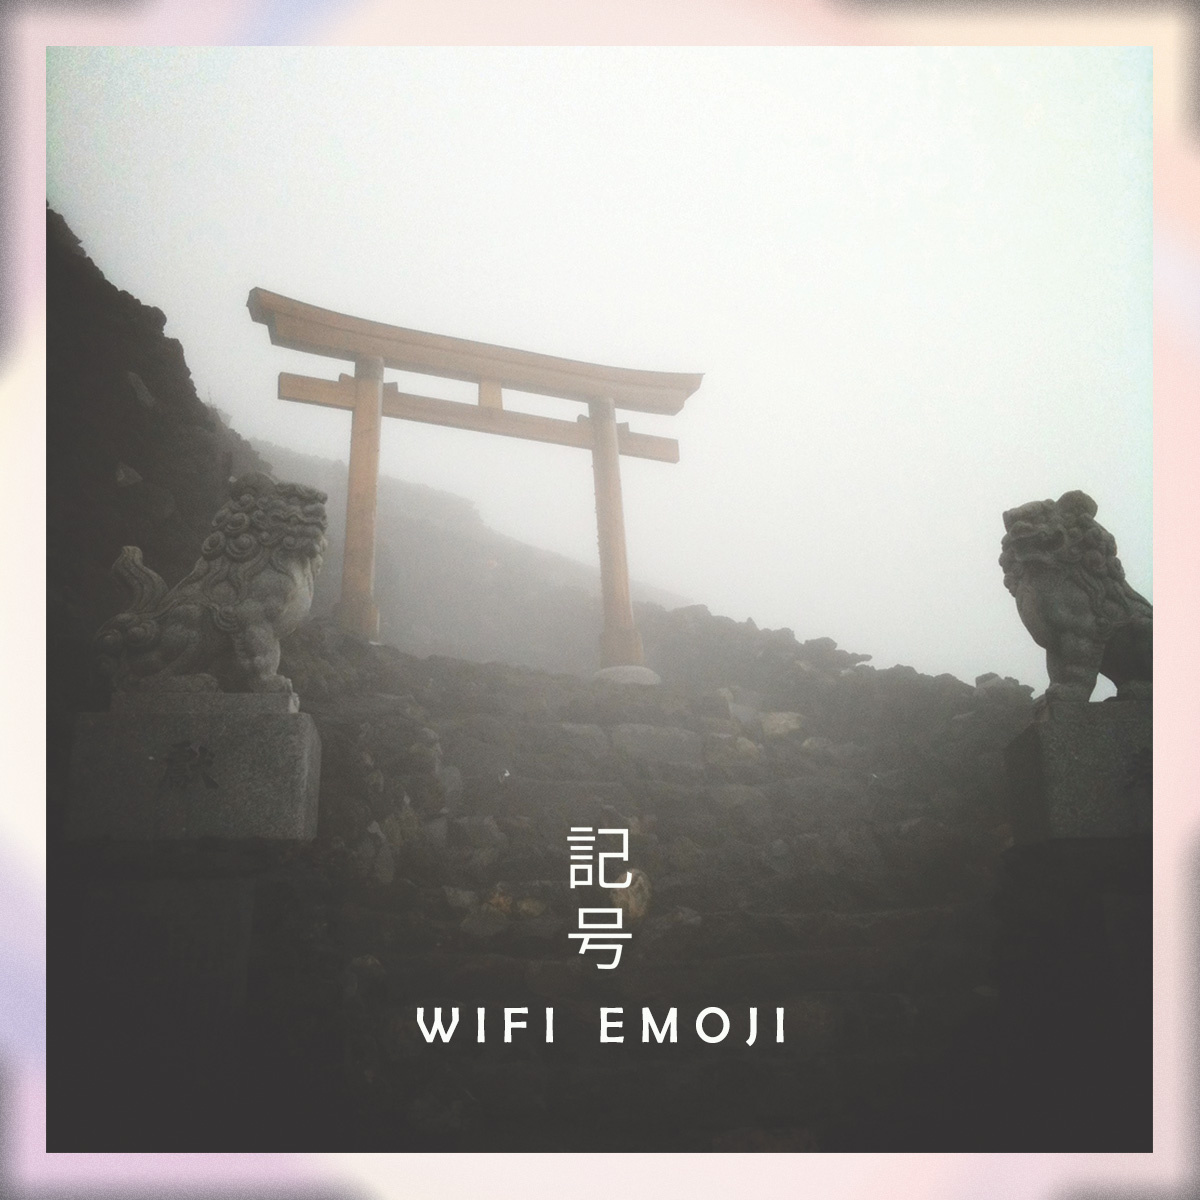 Paisley - "Wifi Emoji" (Release)